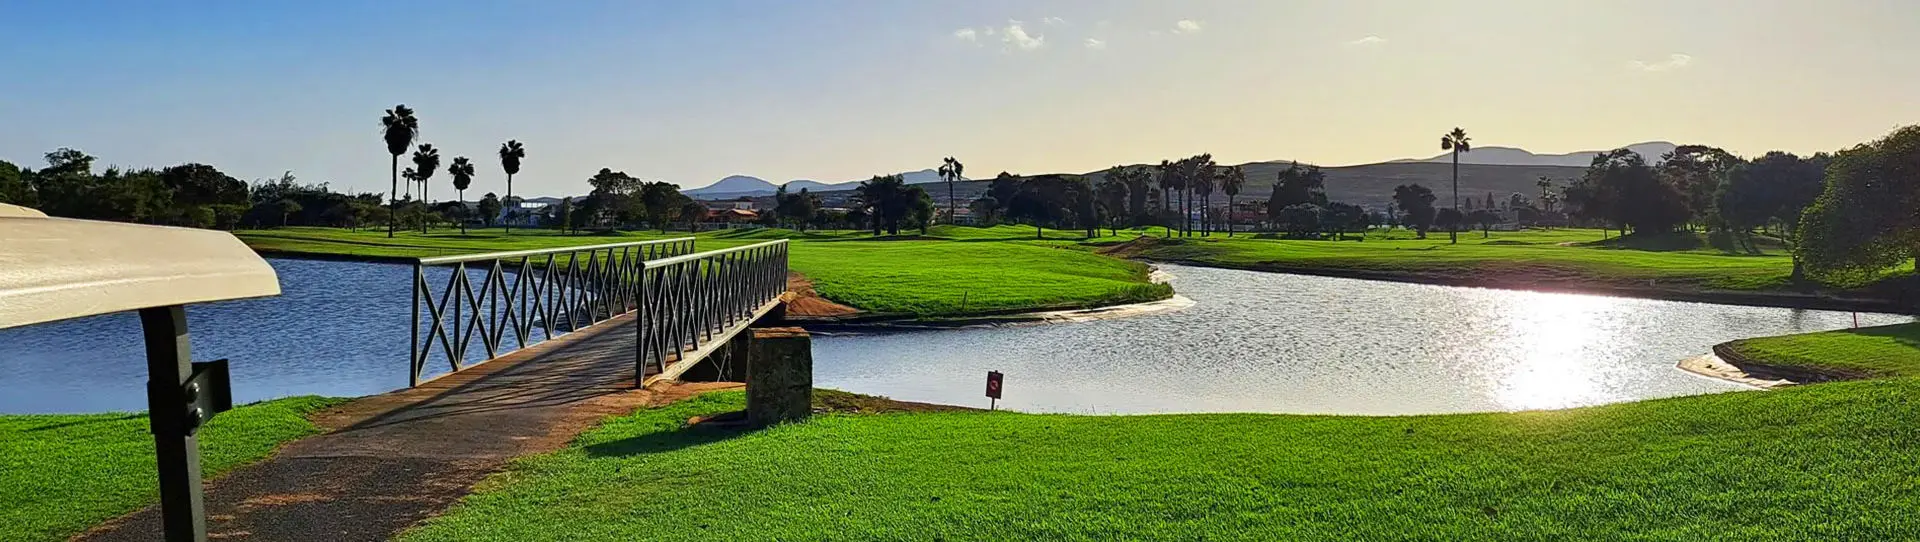 Spain golf courses - Fuerteventura Golf Course - Photo 3